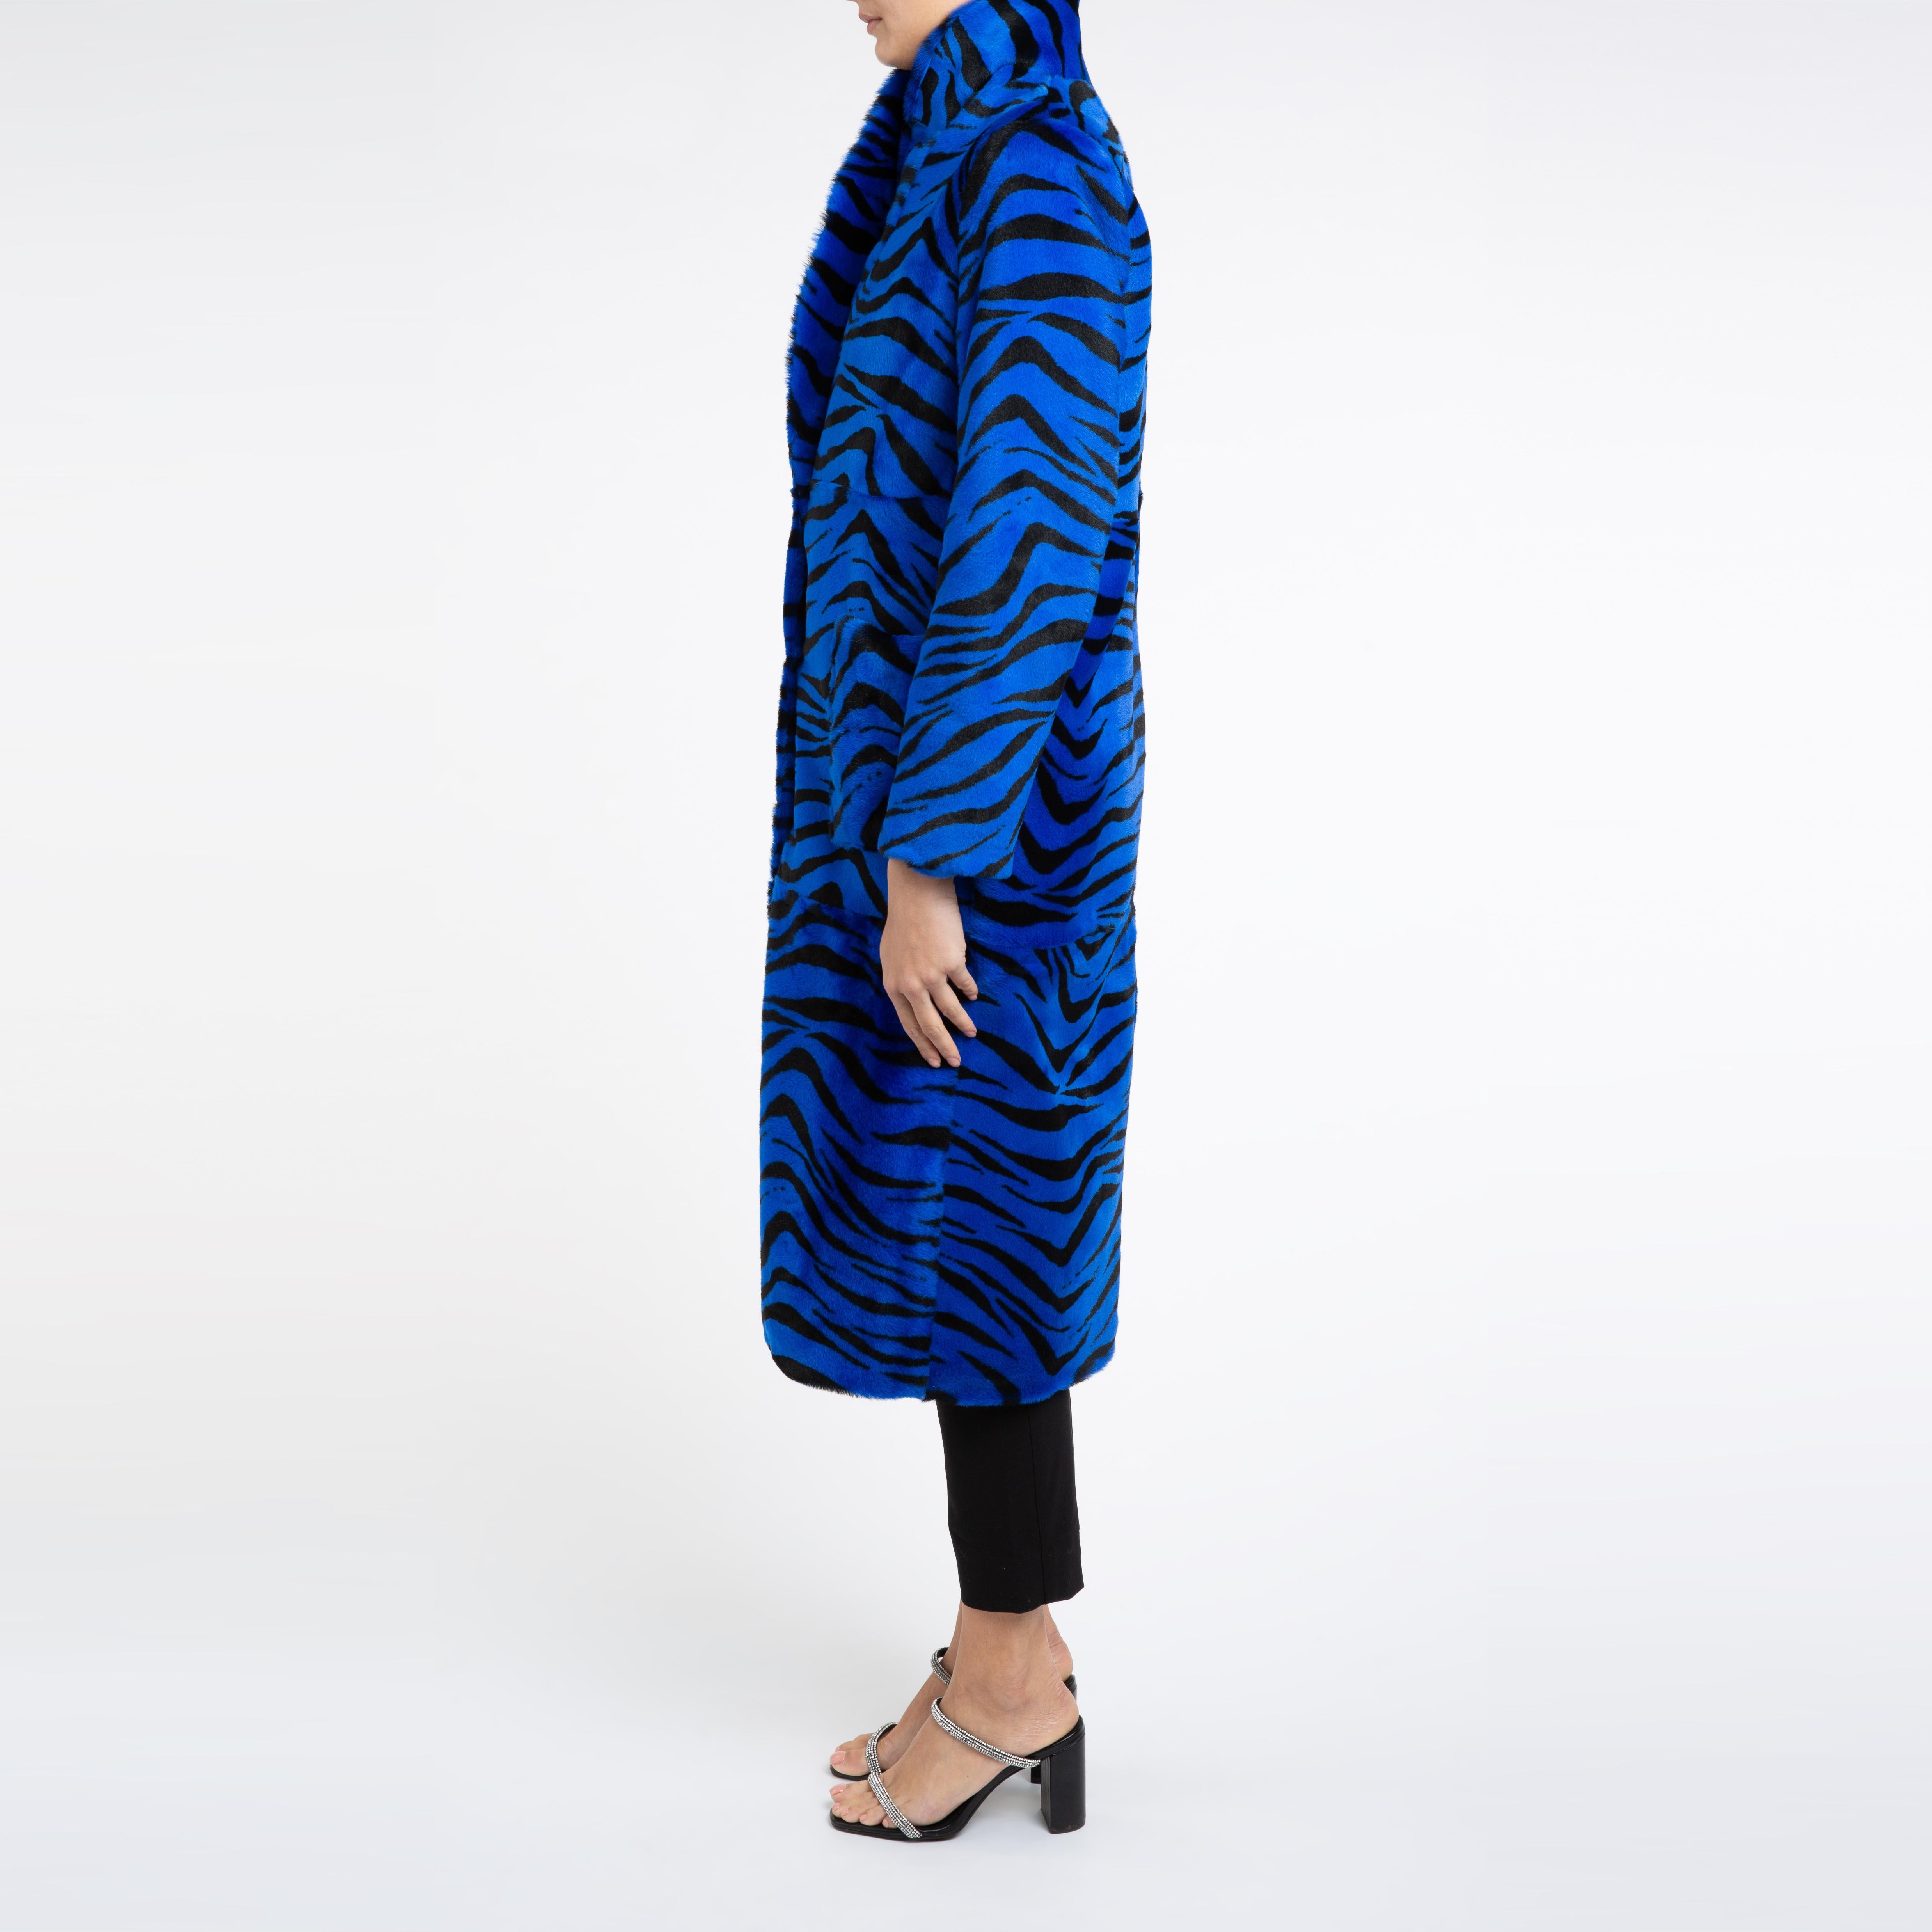 Verheyen London Shearling Coat in Blue Zebra Print size uk 8-10 For Sale 3